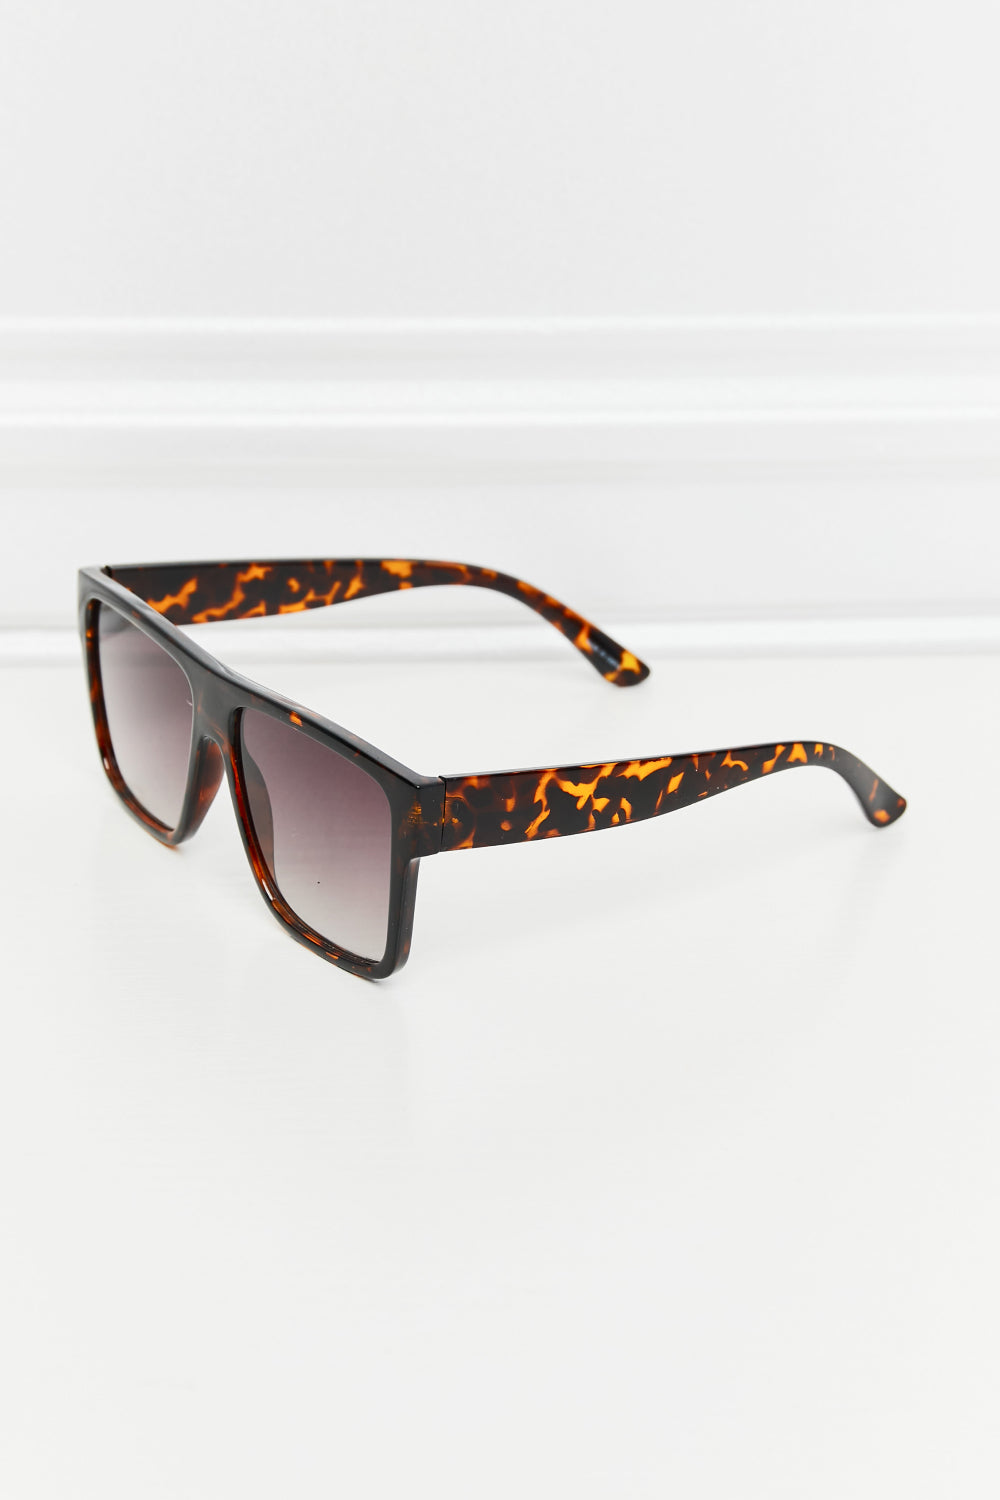 Tortoiseshell Square Full Rim Sunglasses Tangerine One Size Sunglasses by Vim&Vigor | Vim&Vigor Boutique